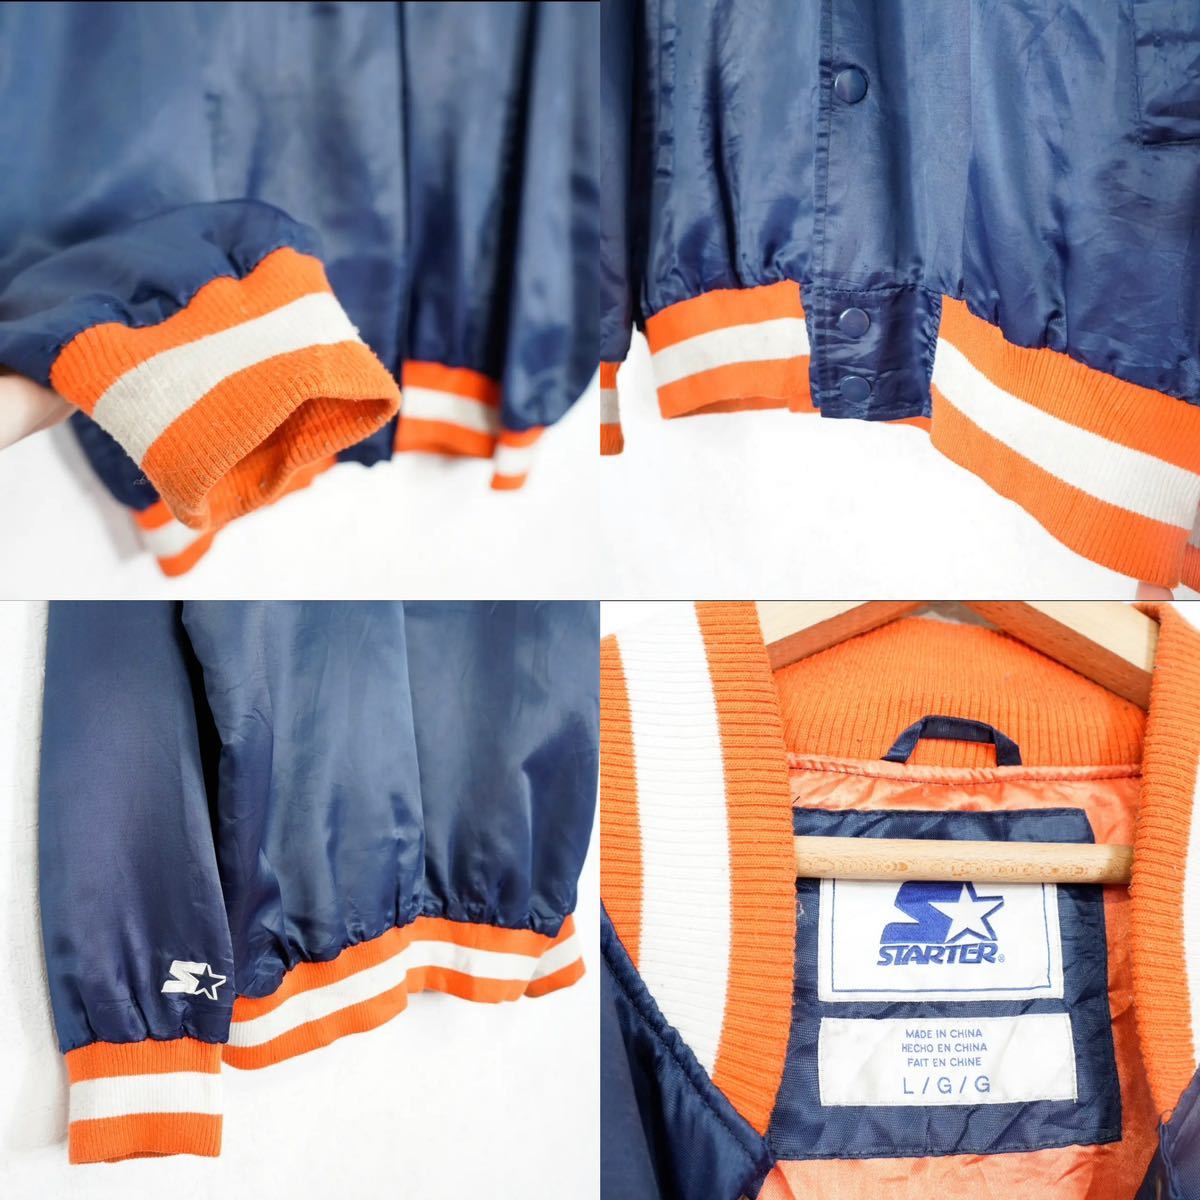 USA VINTAGE Starter EMBROIDERY DESIGN COACH JACKET/アメリカ古着刺繍デザインコーチジャケット